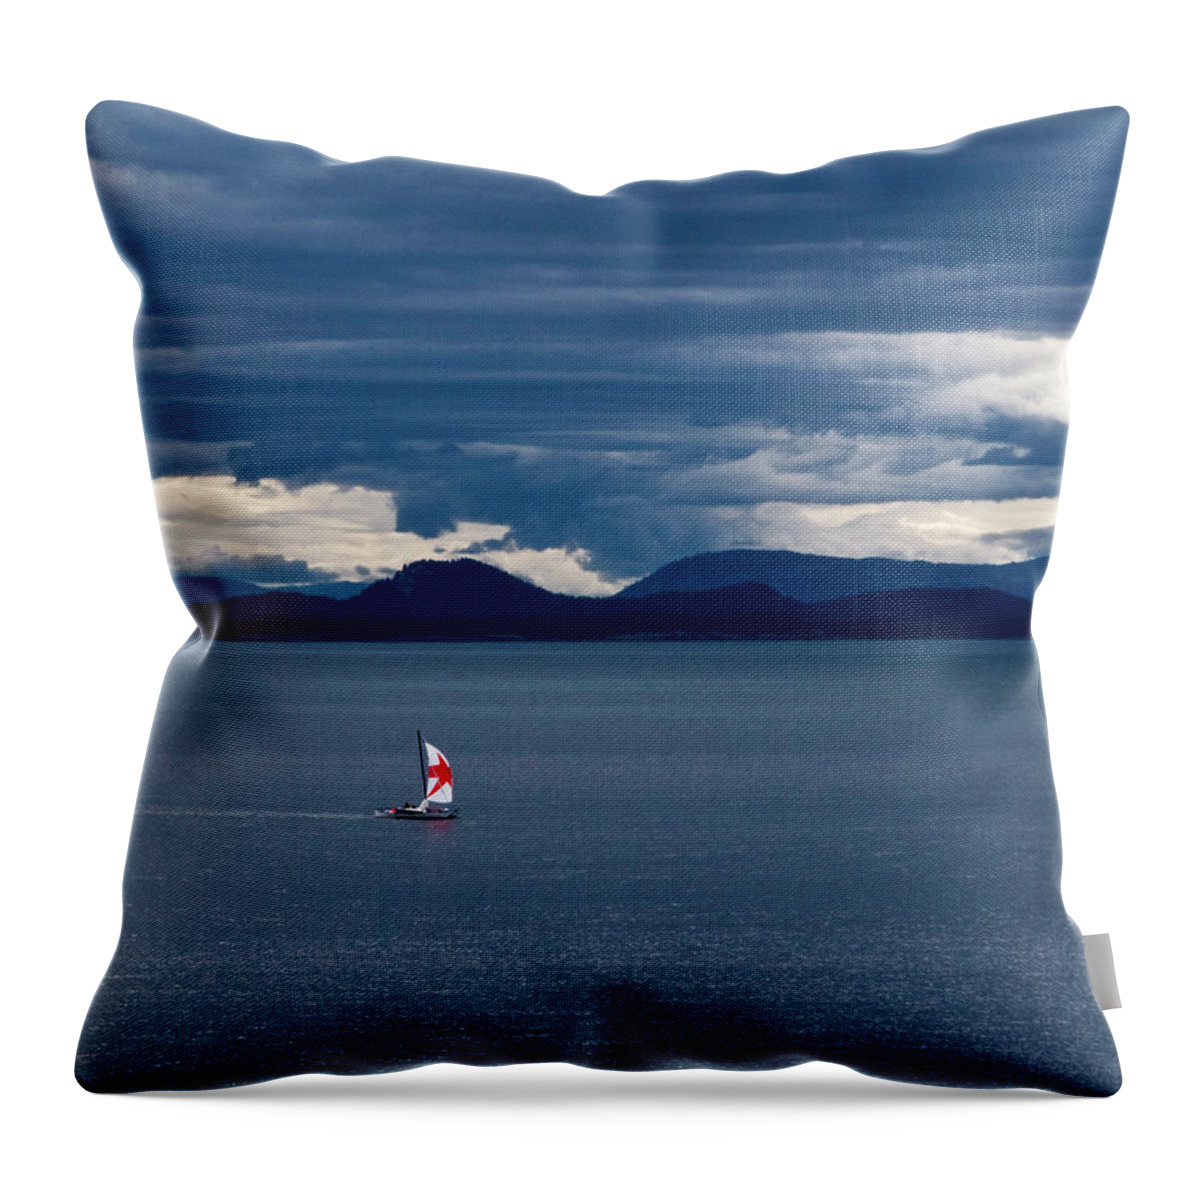 Sailboat Throw Pillow featuring the photograph Red Star Sail by Lorraine Devon Wilke